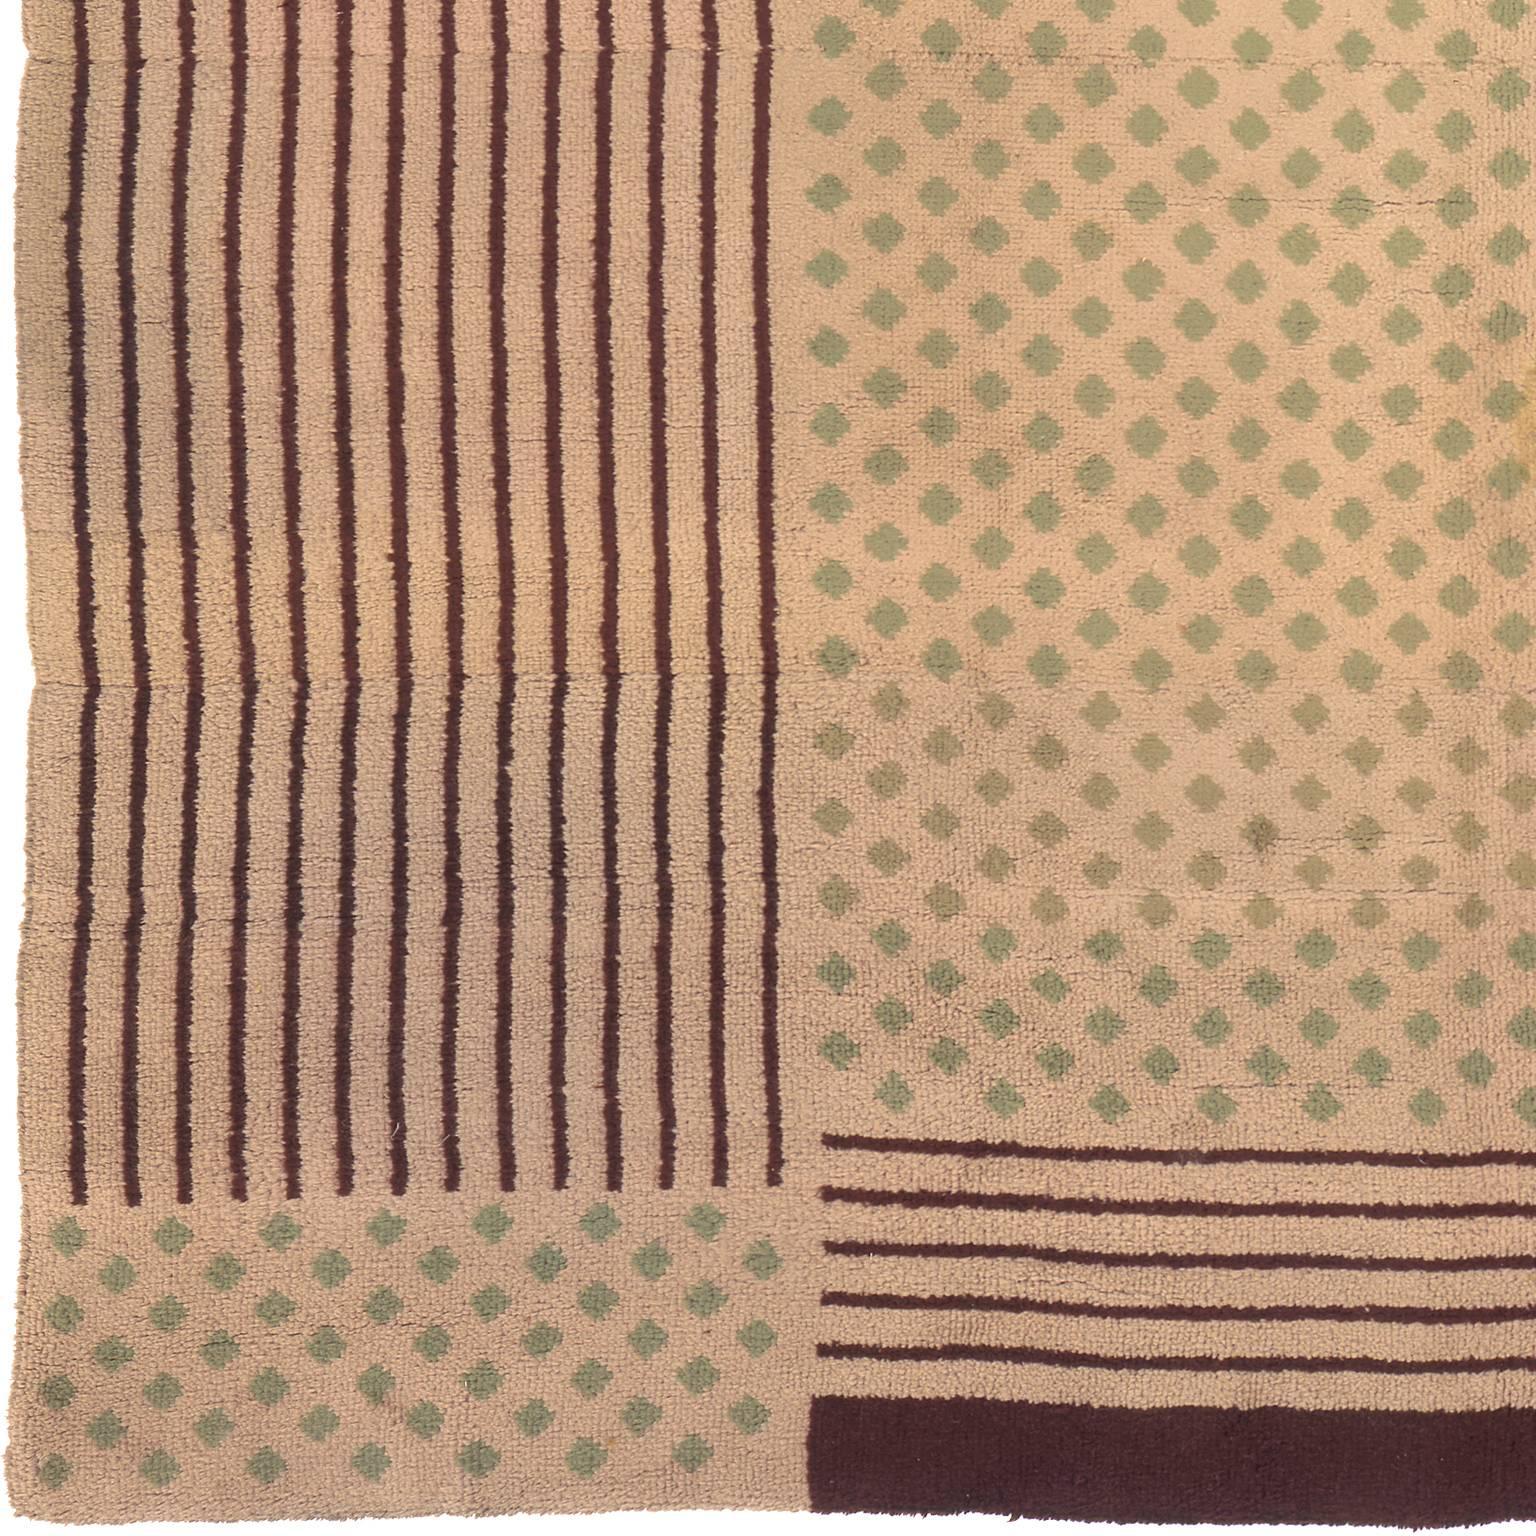 Savonnerie Carpet, 1930
France, circa 1930
Handwoven